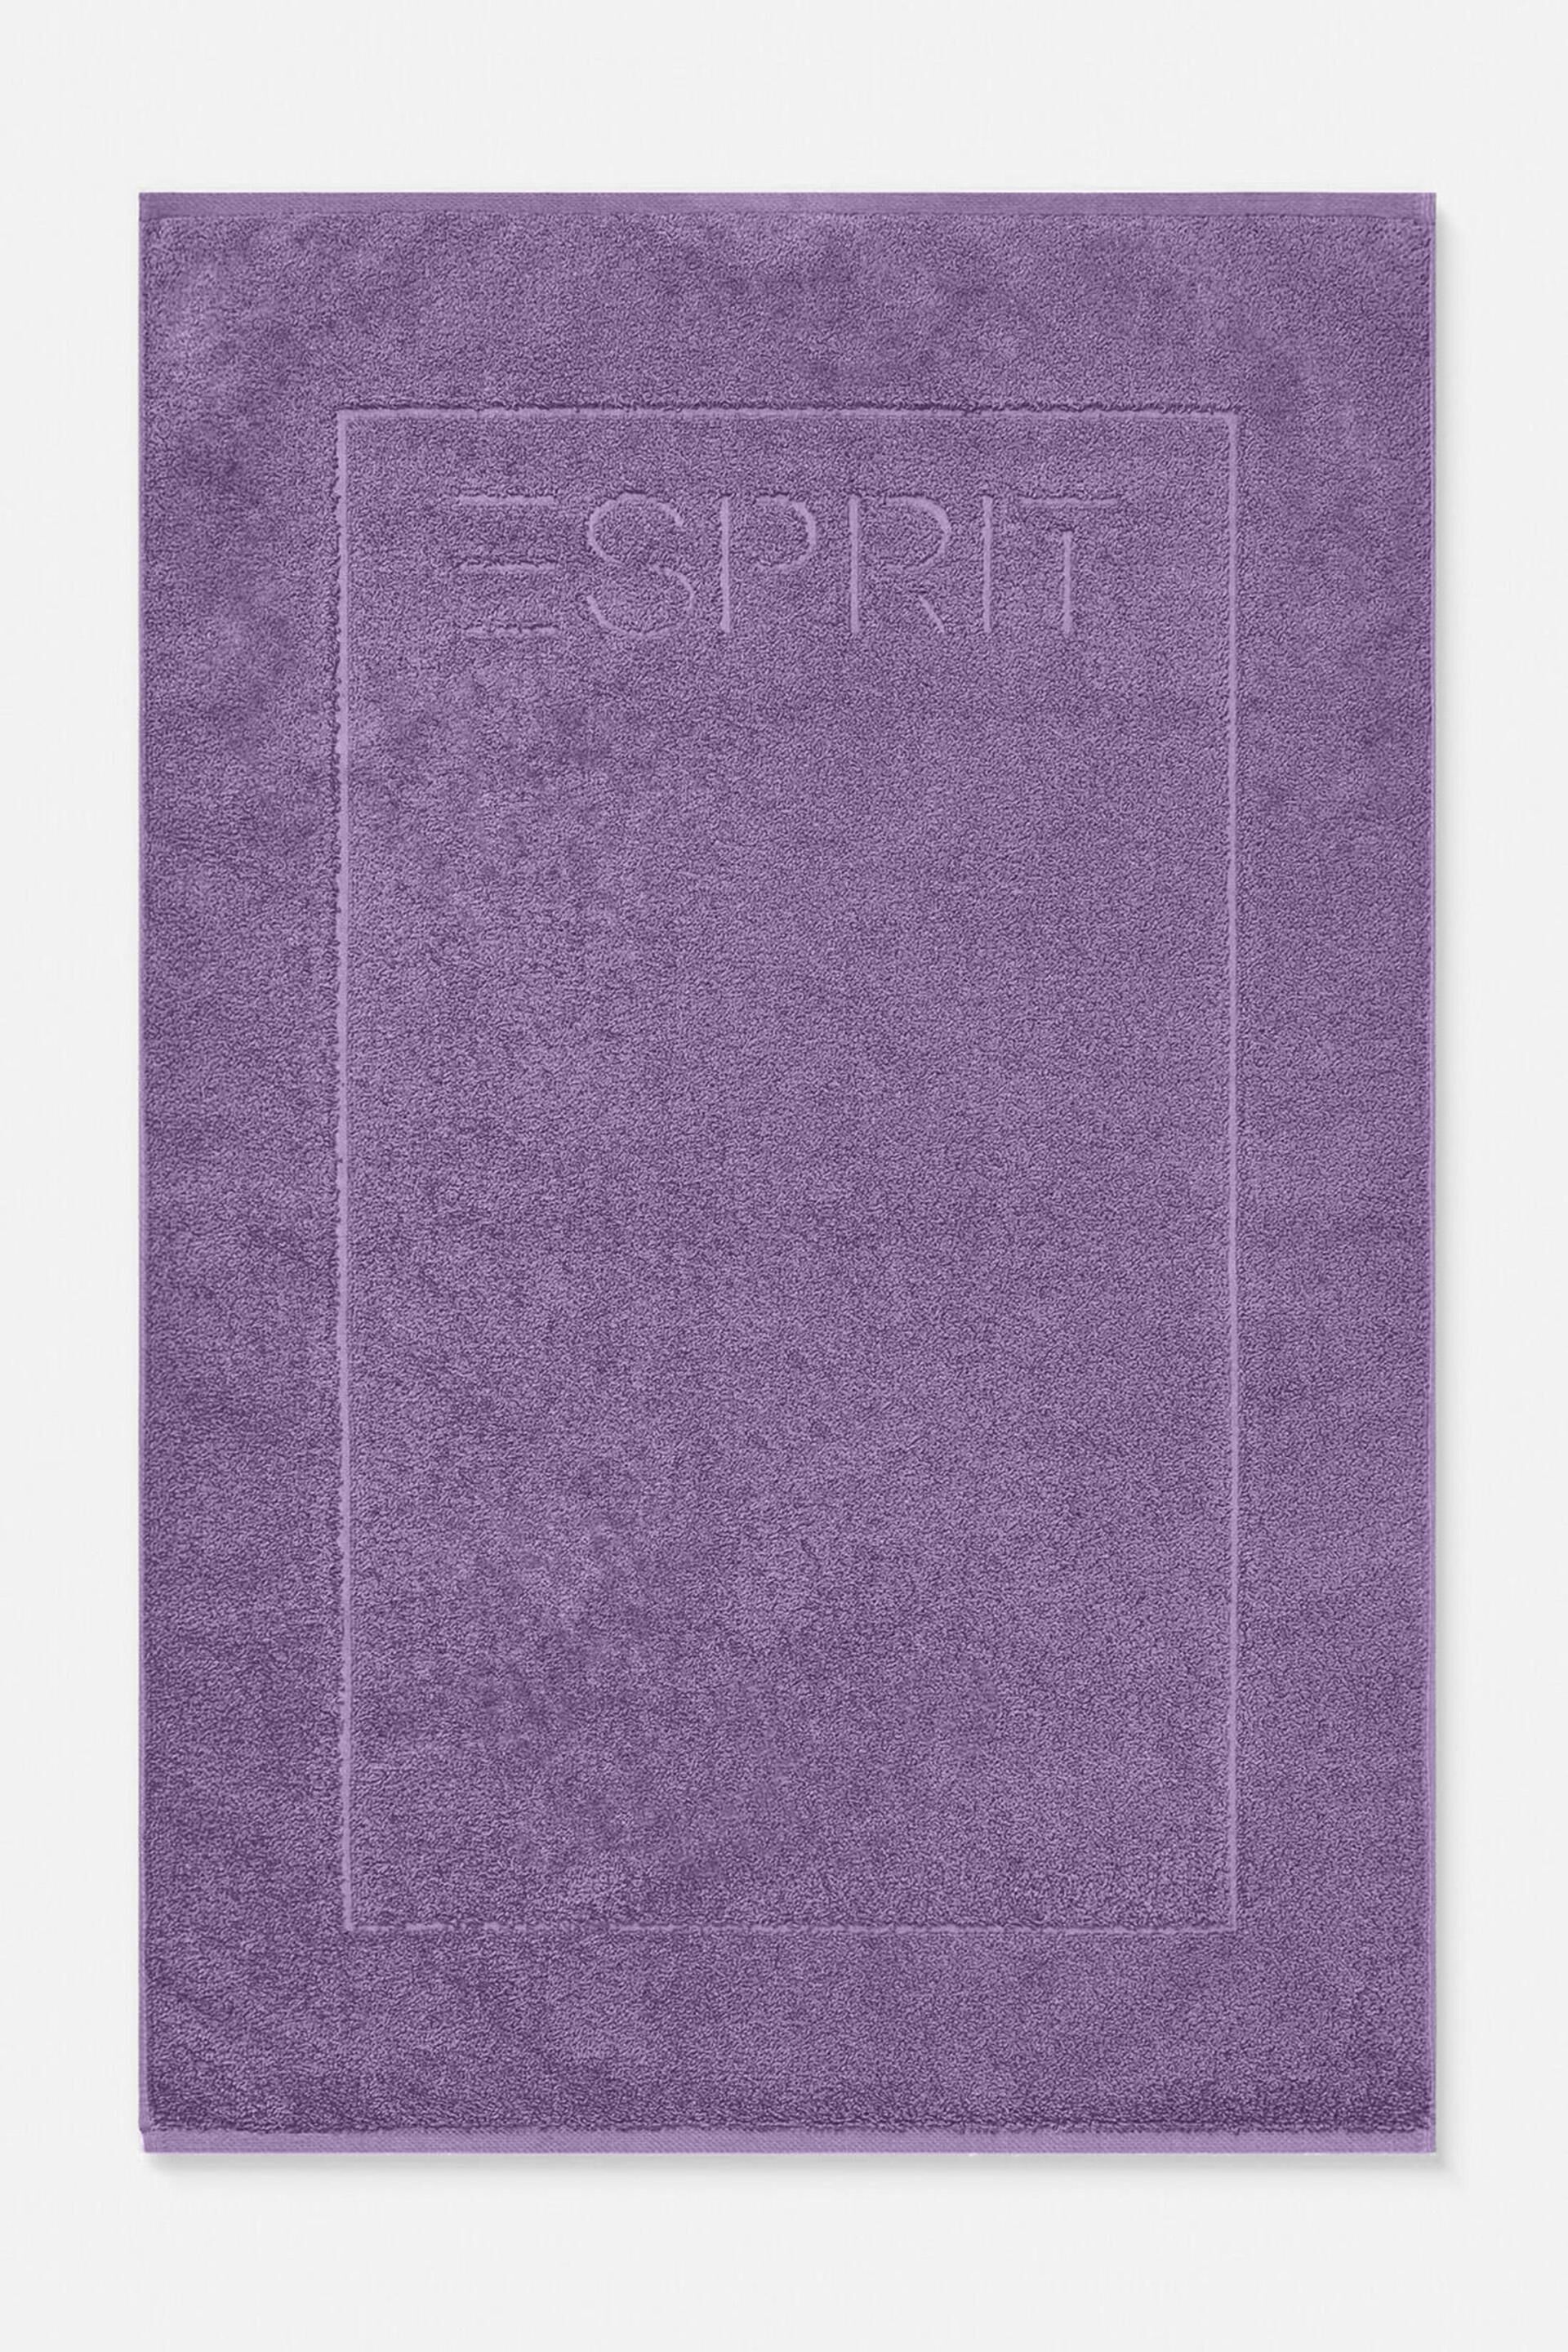 Esprit made 100% cotton mat bath of Terrycloth